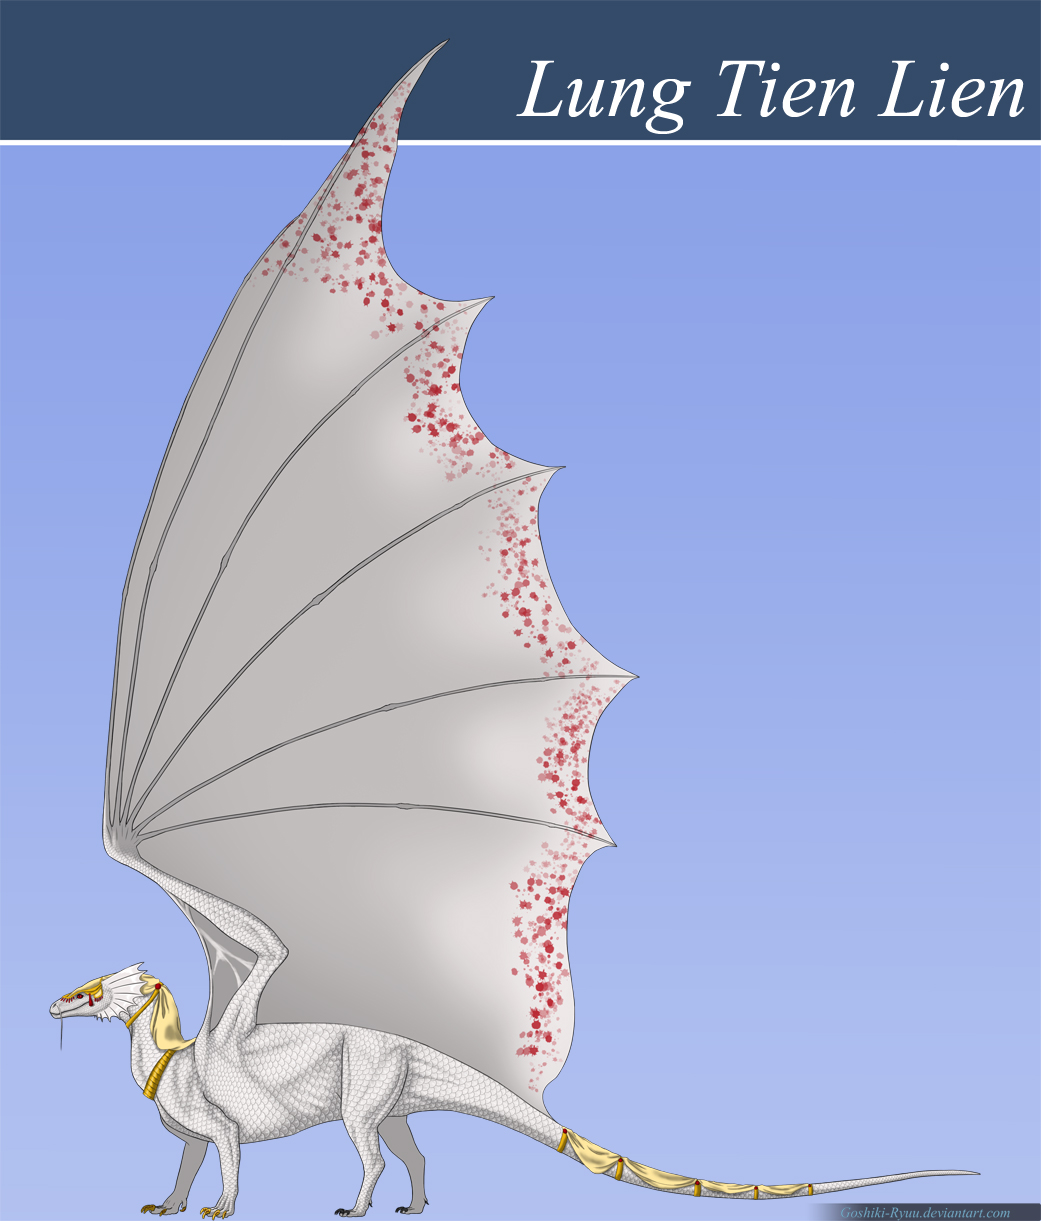 Lung Tien Lien.jpg